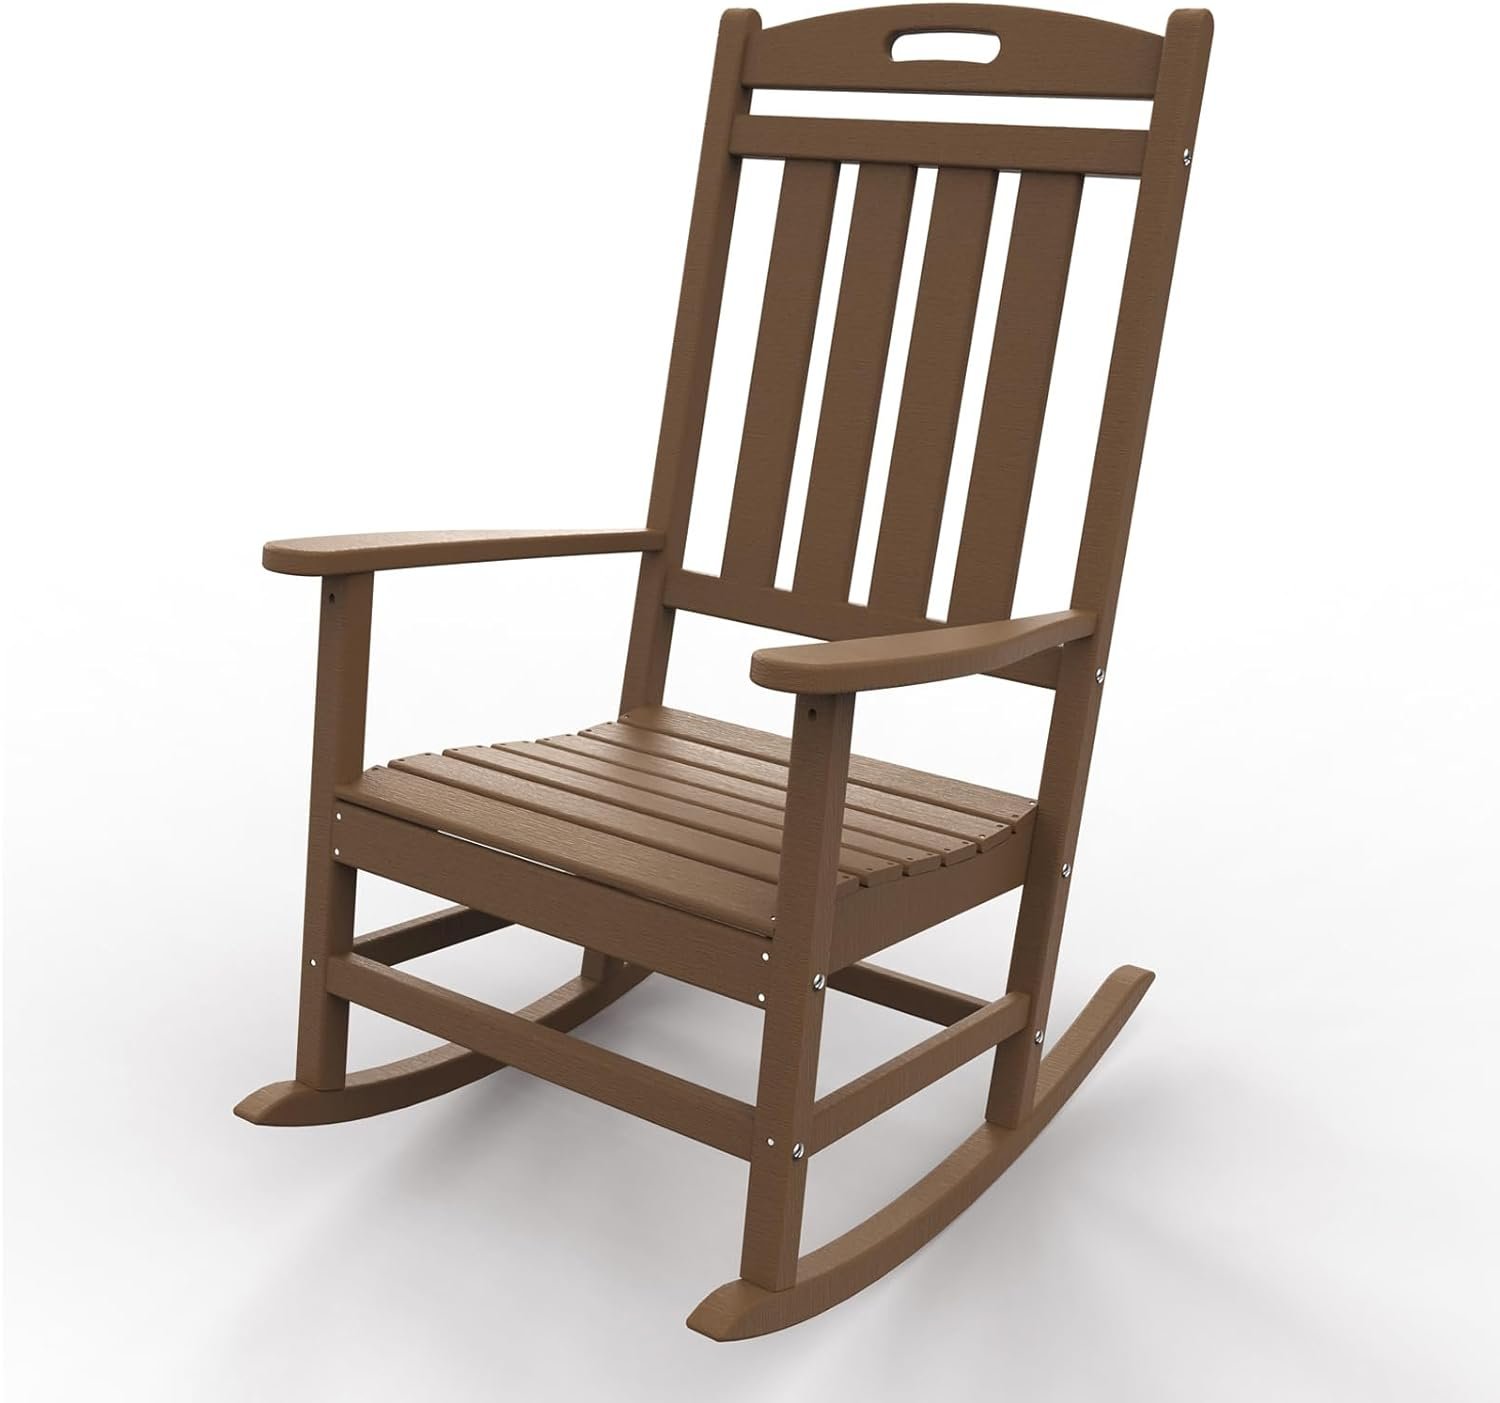 POLYDUN Outdoor Rocking Chair Review